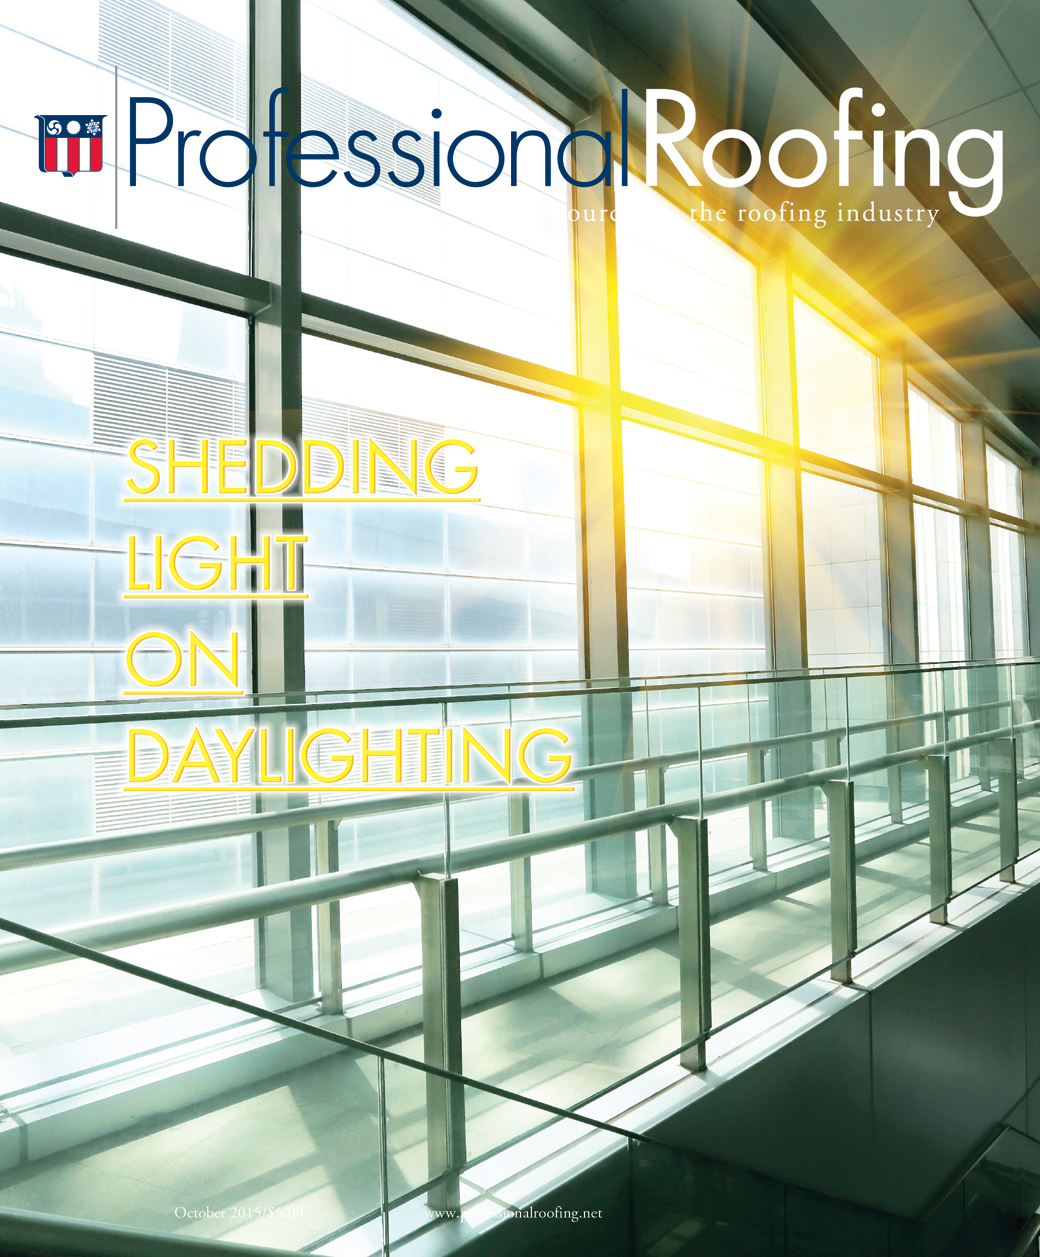 Professional Roofing Magazine 10/1/2015